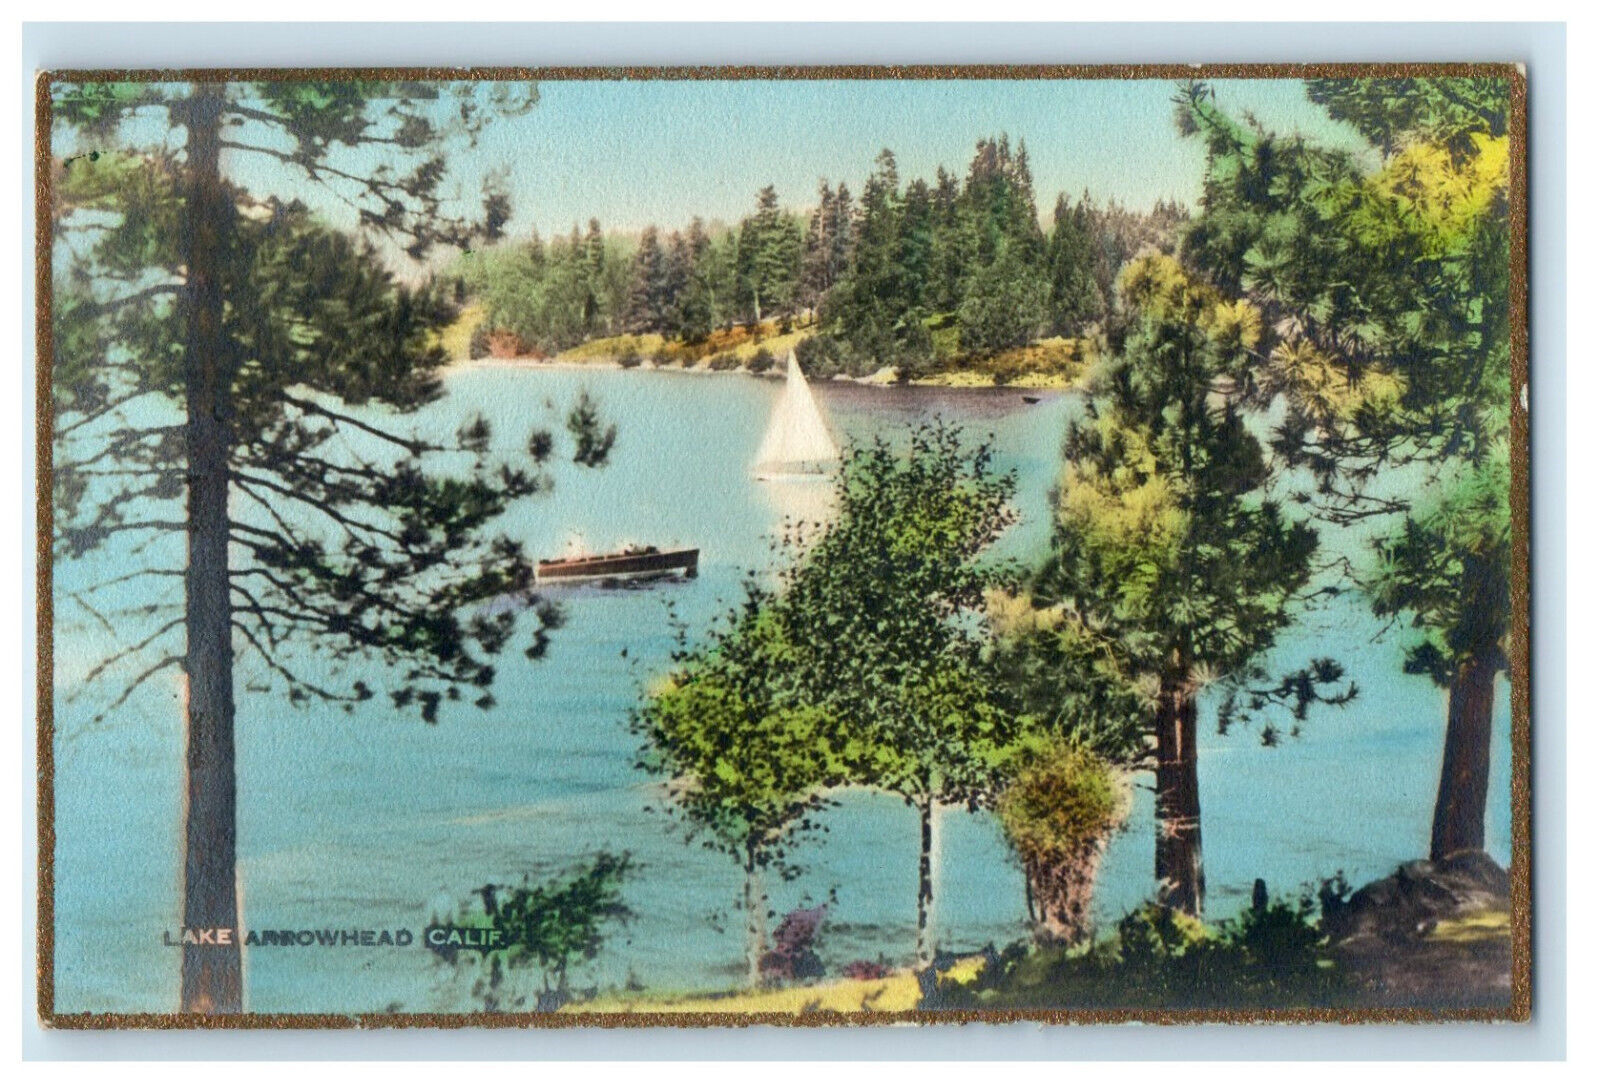 1936 Scene of Boat, Lake Arrowhead California CA Vintage Posted Postcard